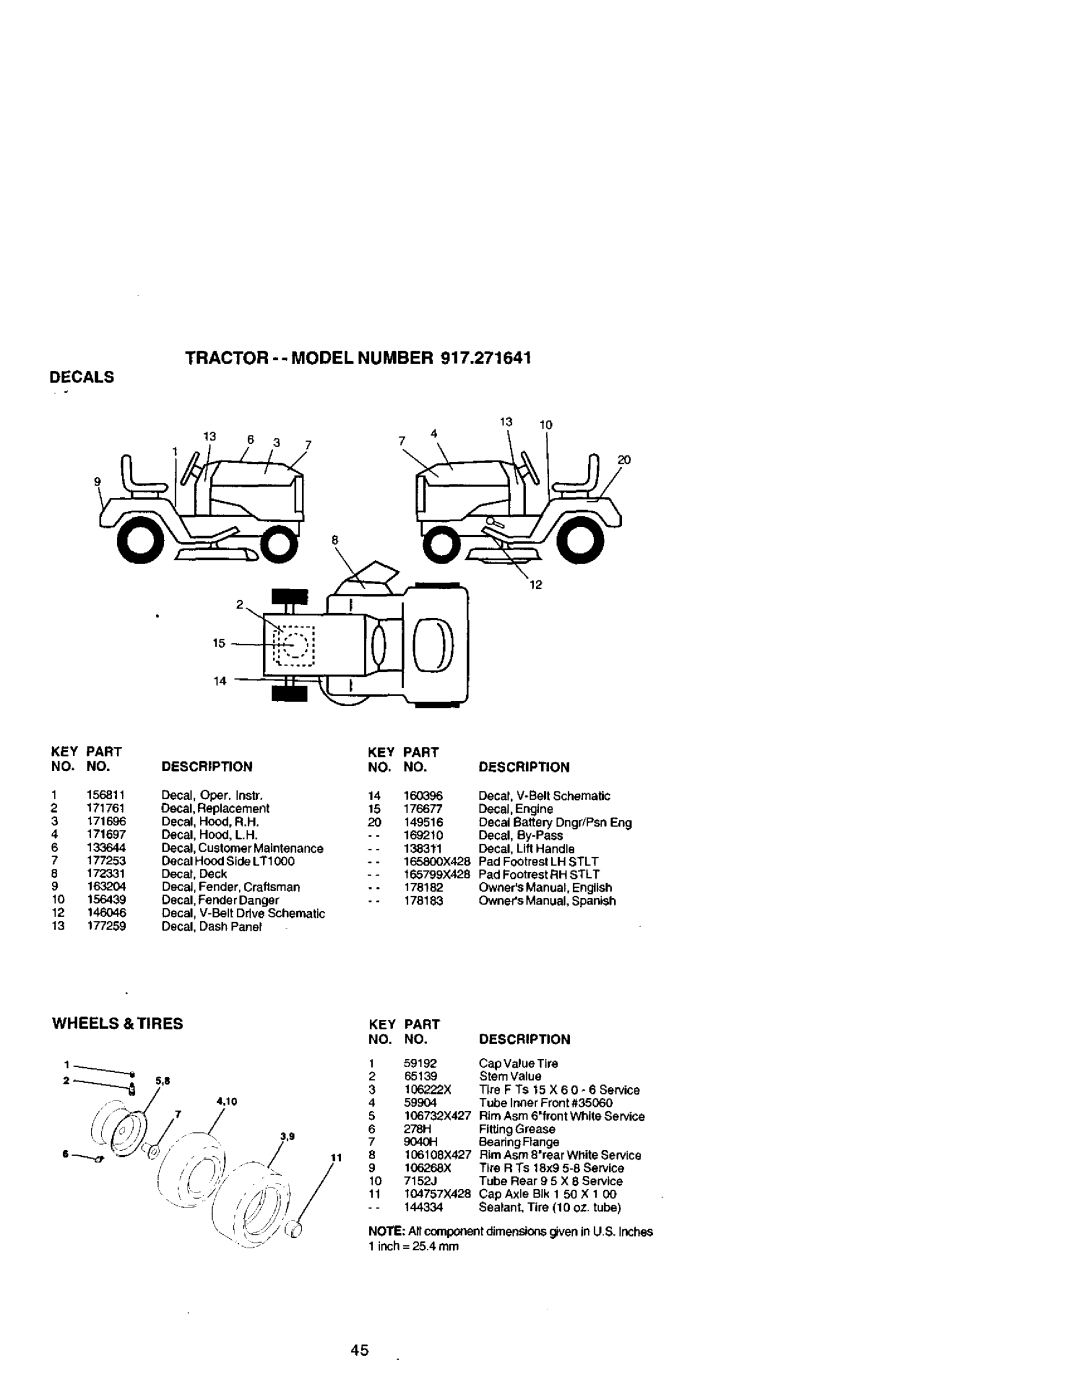 Craftsman 917.271641 owner manual Decals, Tractor -- Model Number, Wheels &Tires 